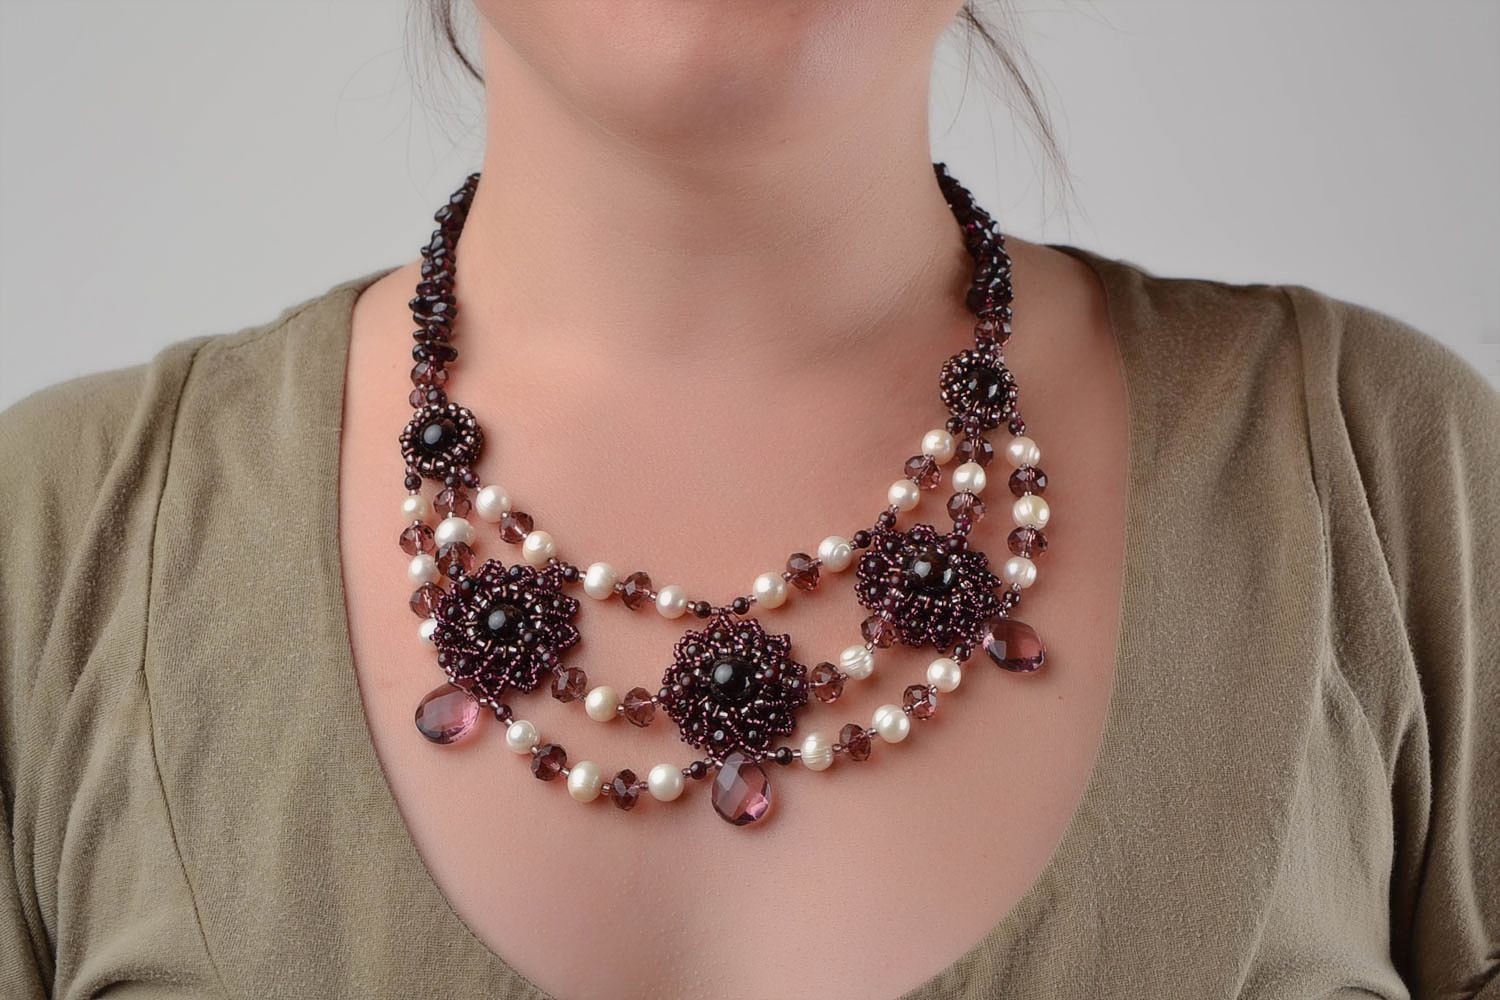 Handmade dark woven volume beaded women's designer necklace with natural stones photo 1